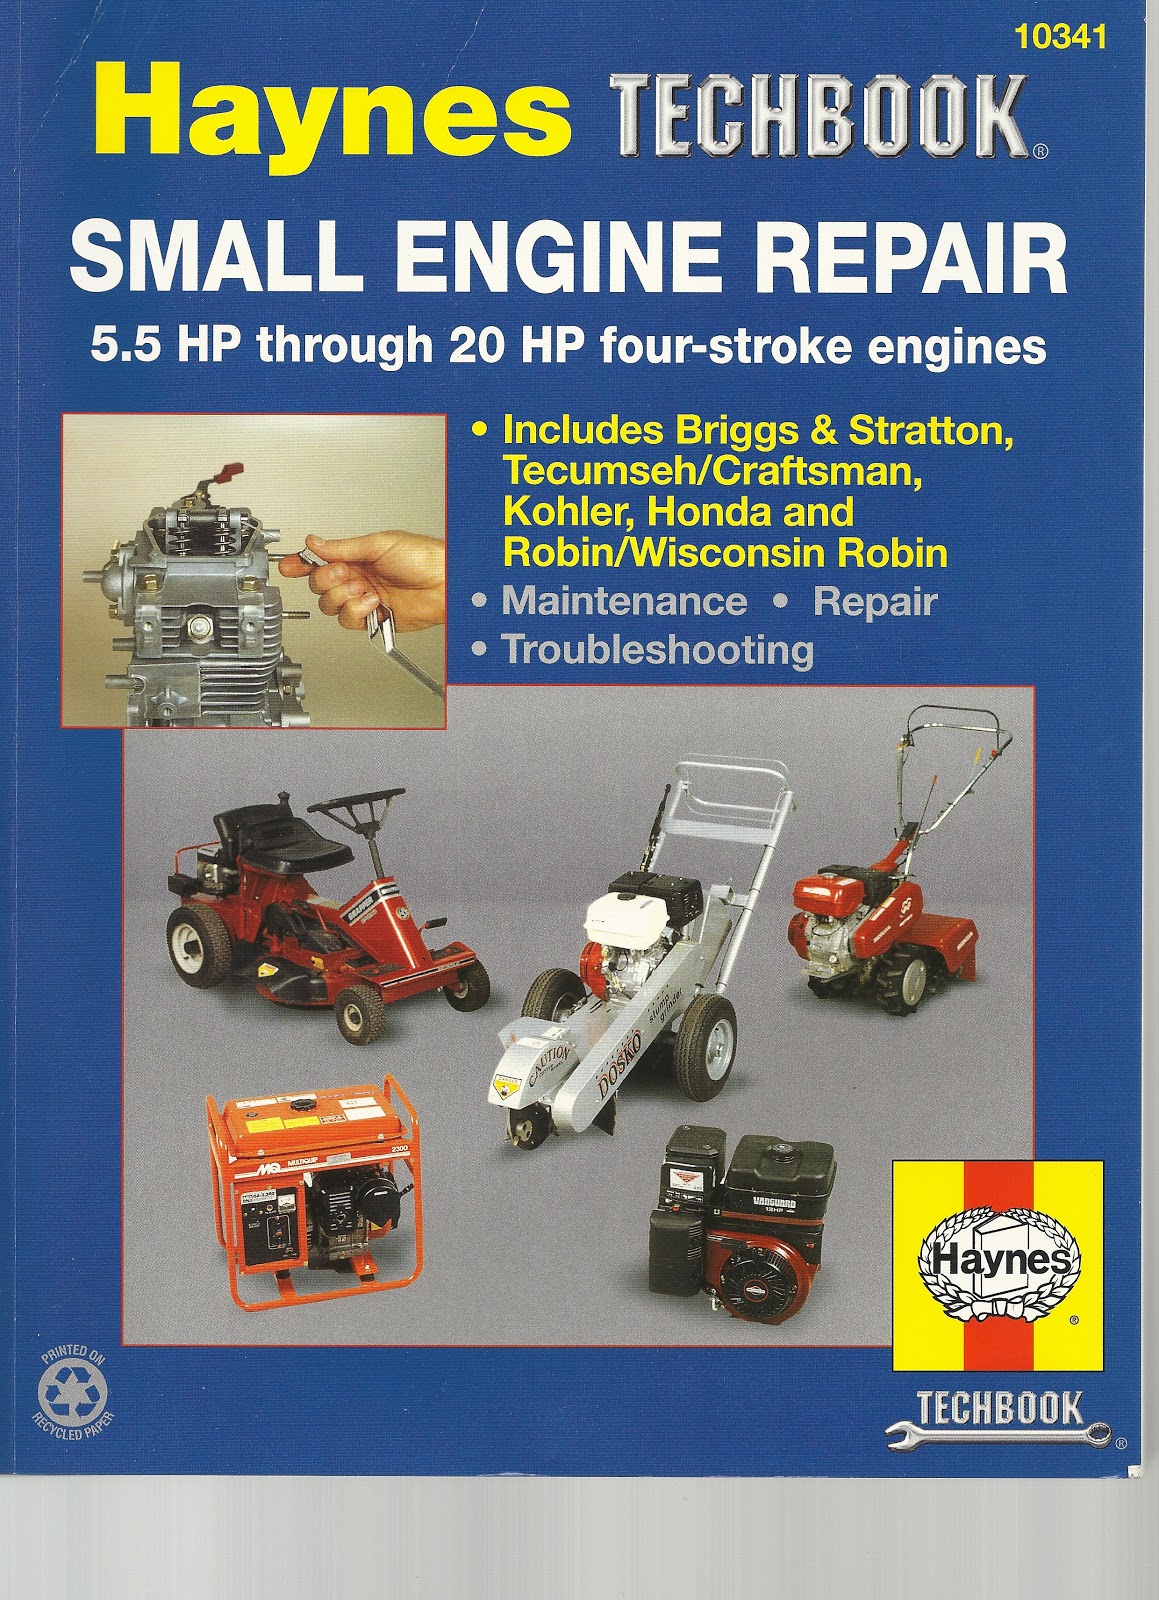 4 Stroke Rebuild: Post - the Fourth - Small Engine Repair Manuals